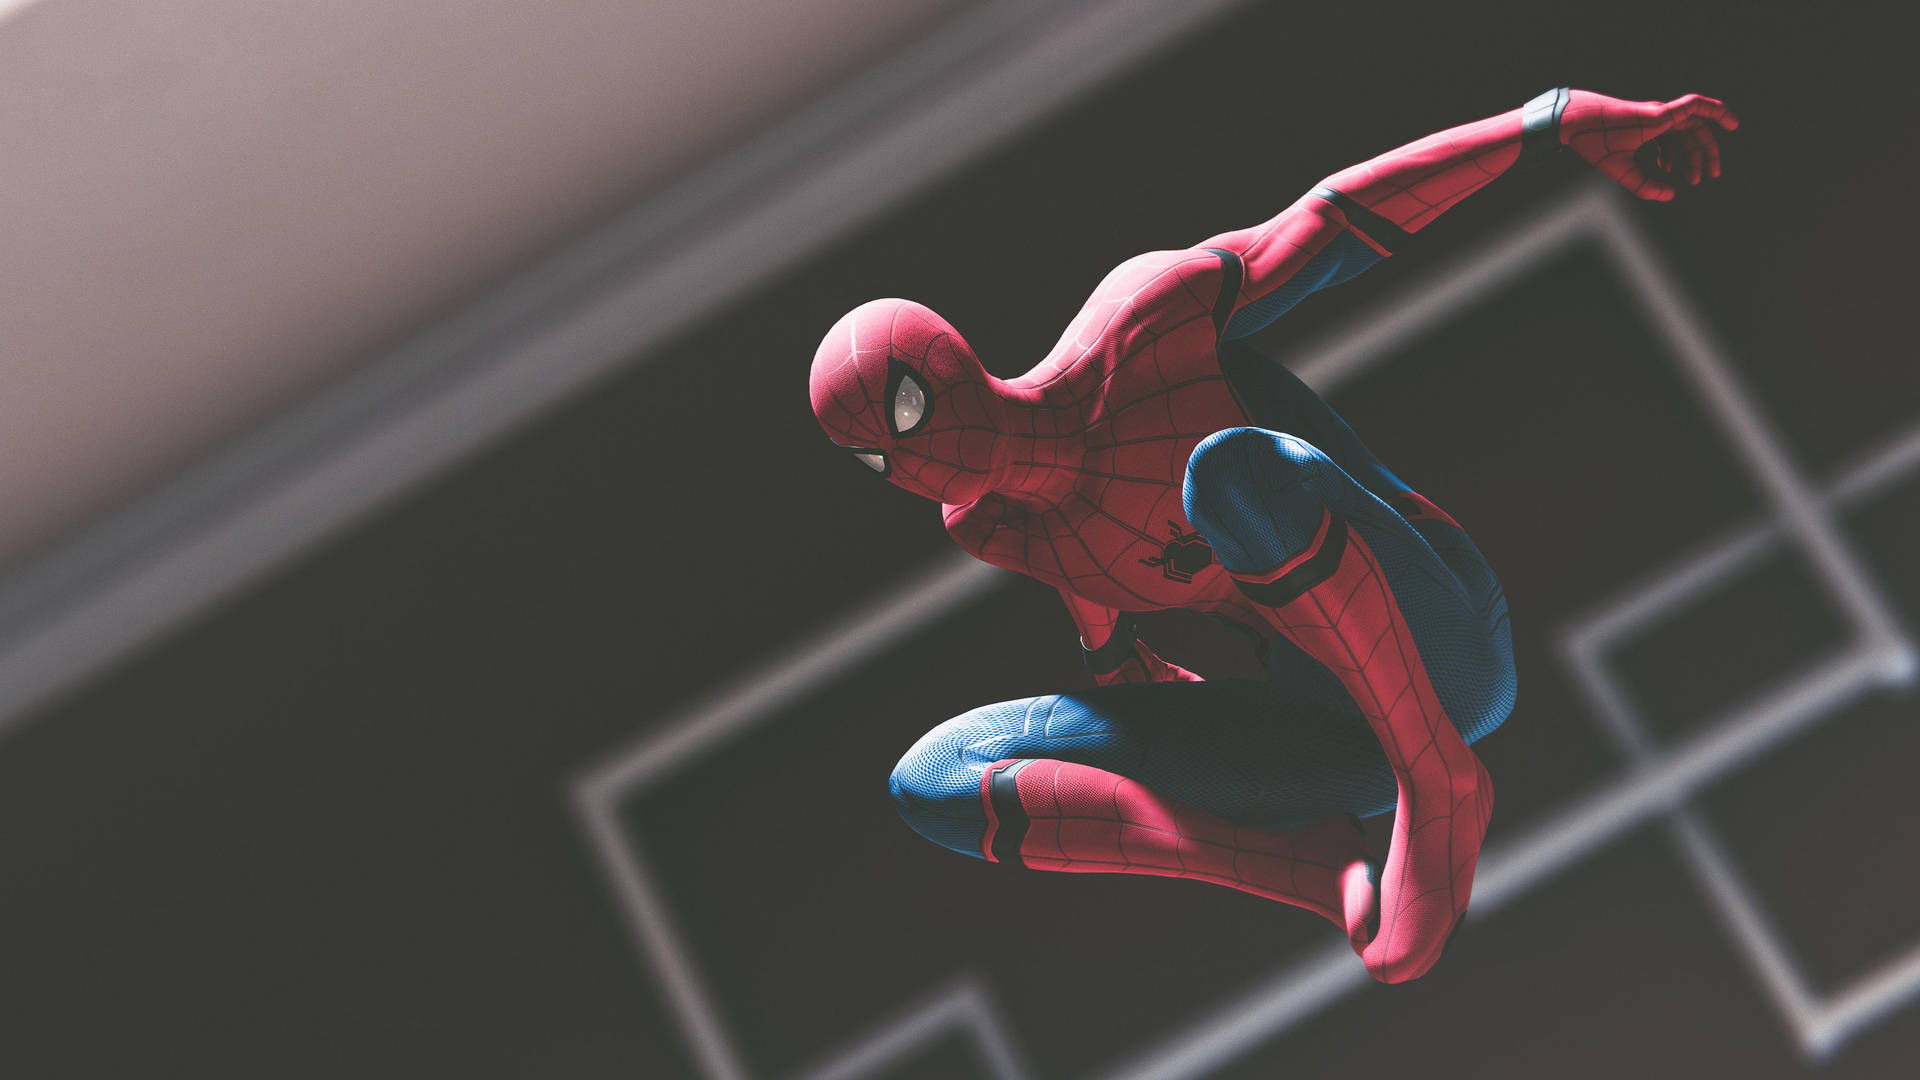 Free 4k Spider Man Wallpaper Downloads, [100+] 4k Spider Man Wallpapers for  FREE 